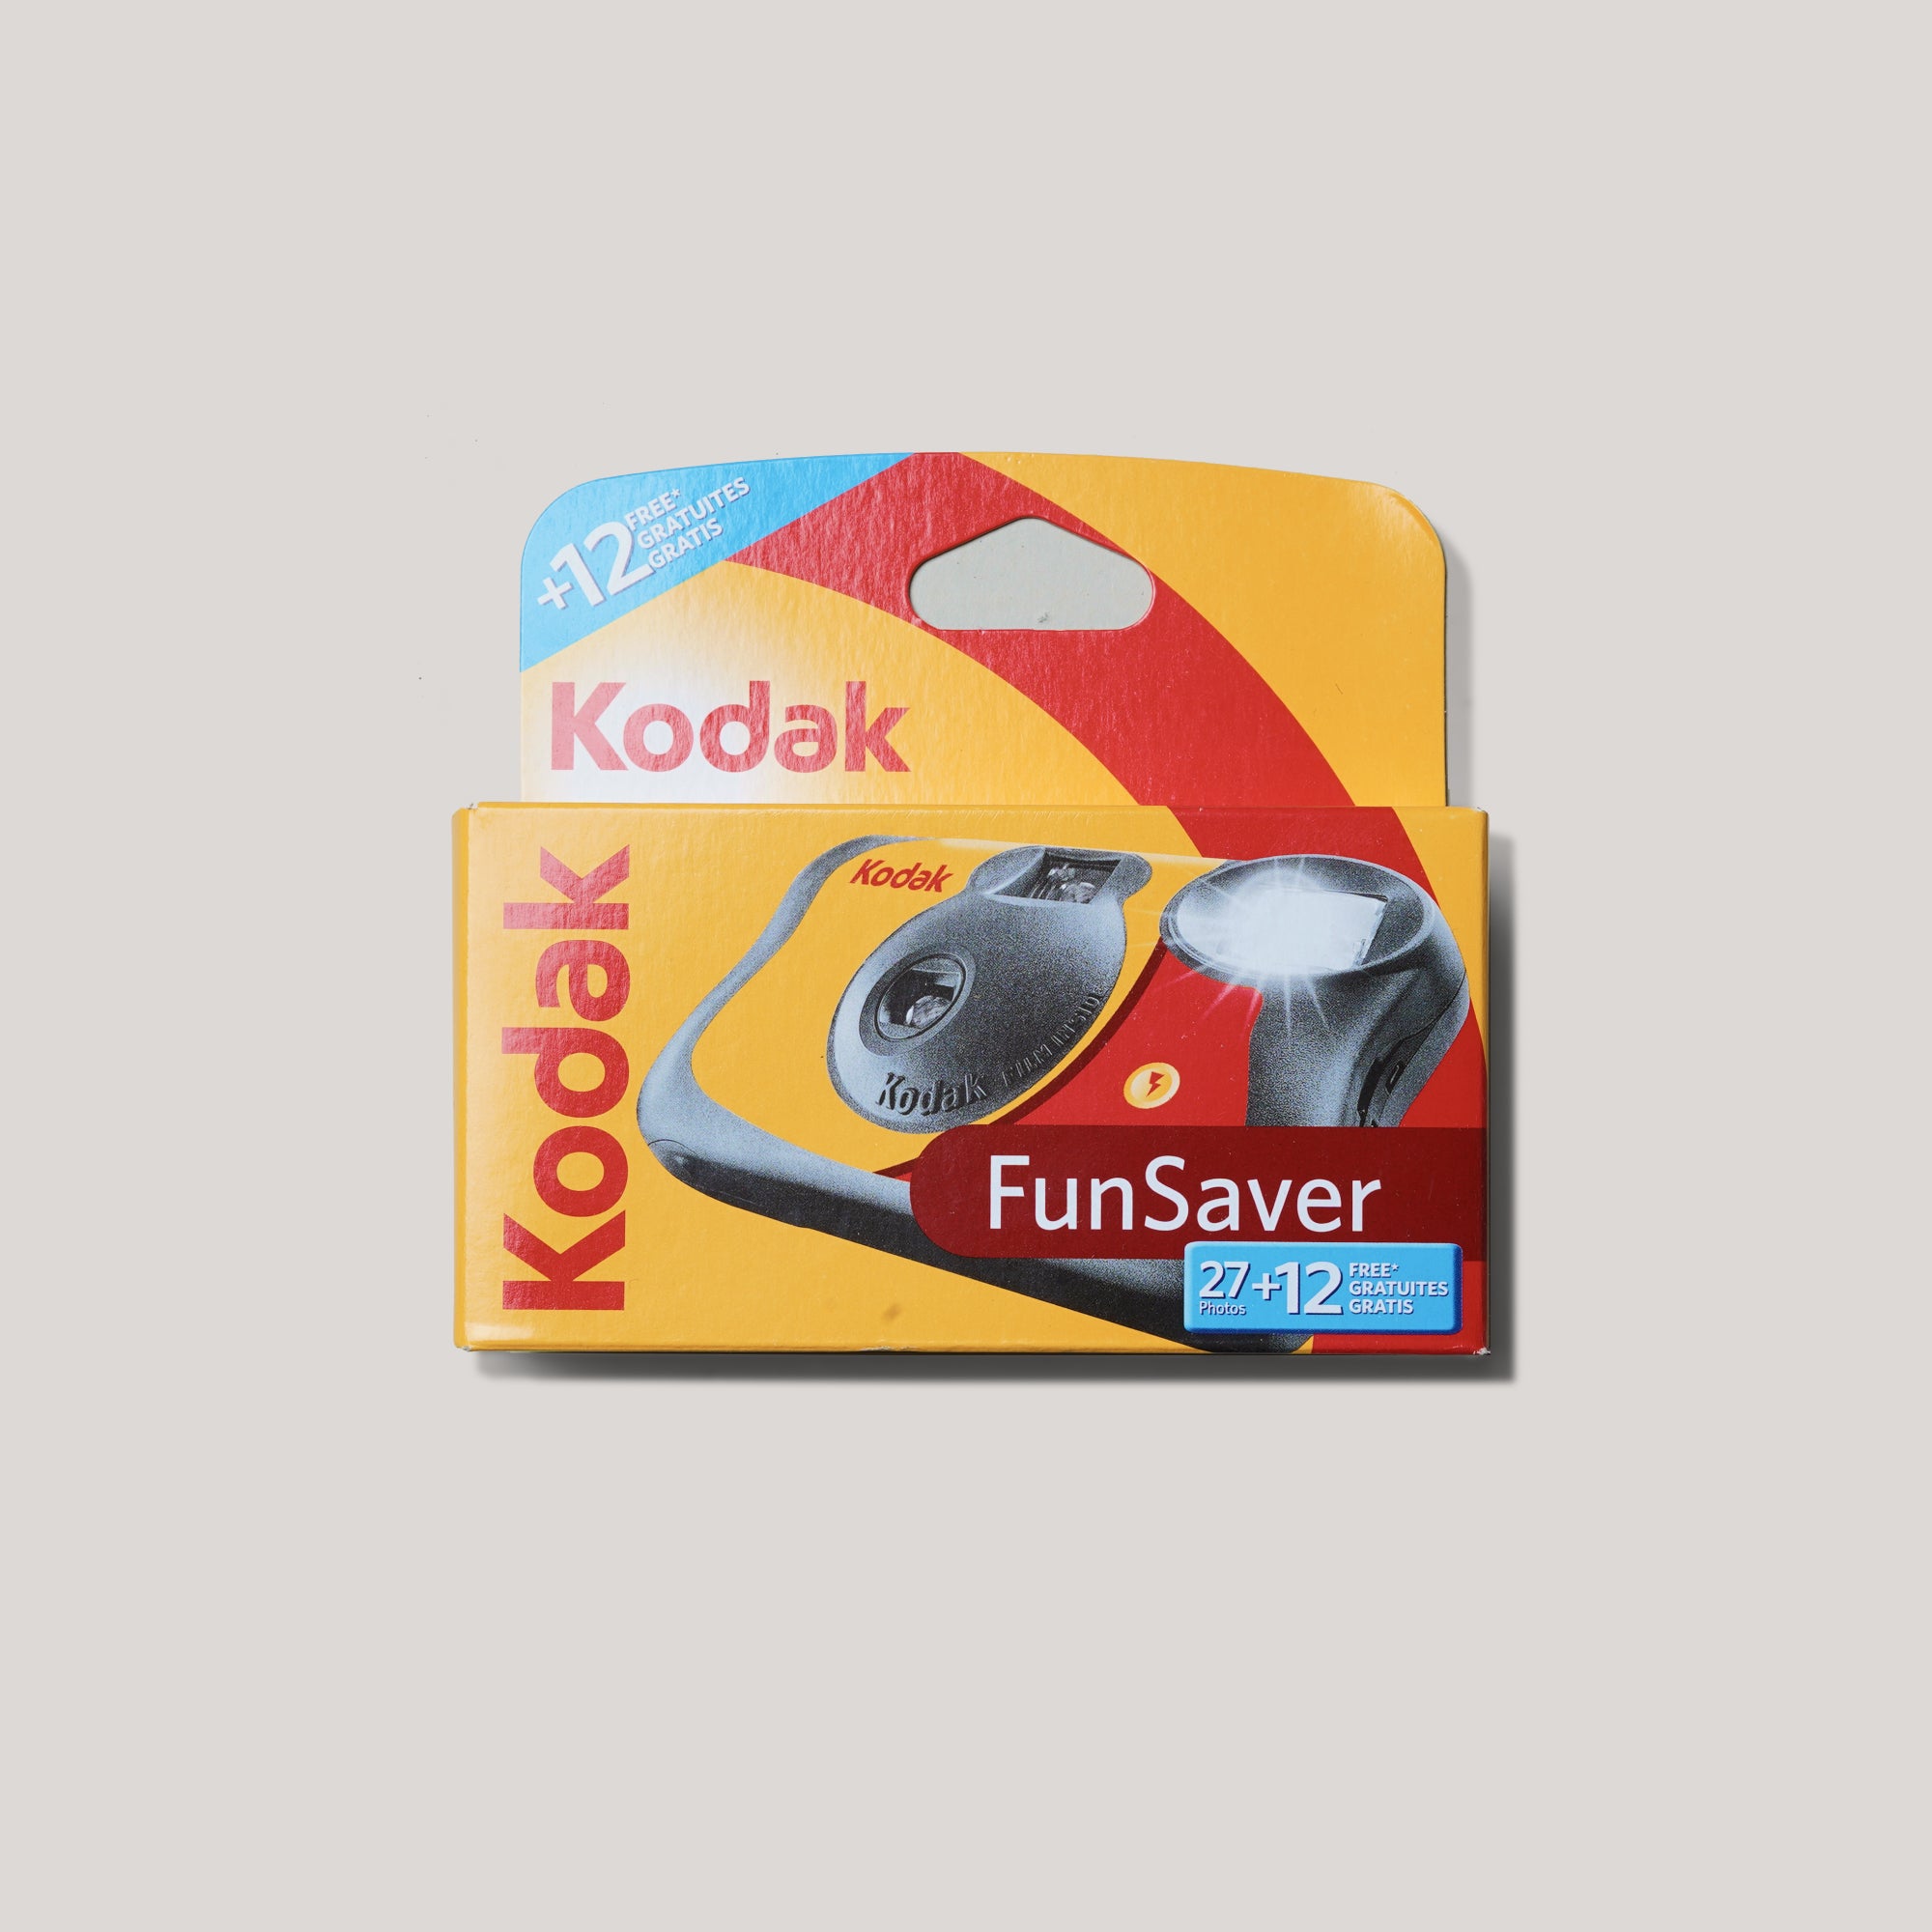 Buy Kodak FunSaver now at Analogue Amsterdam